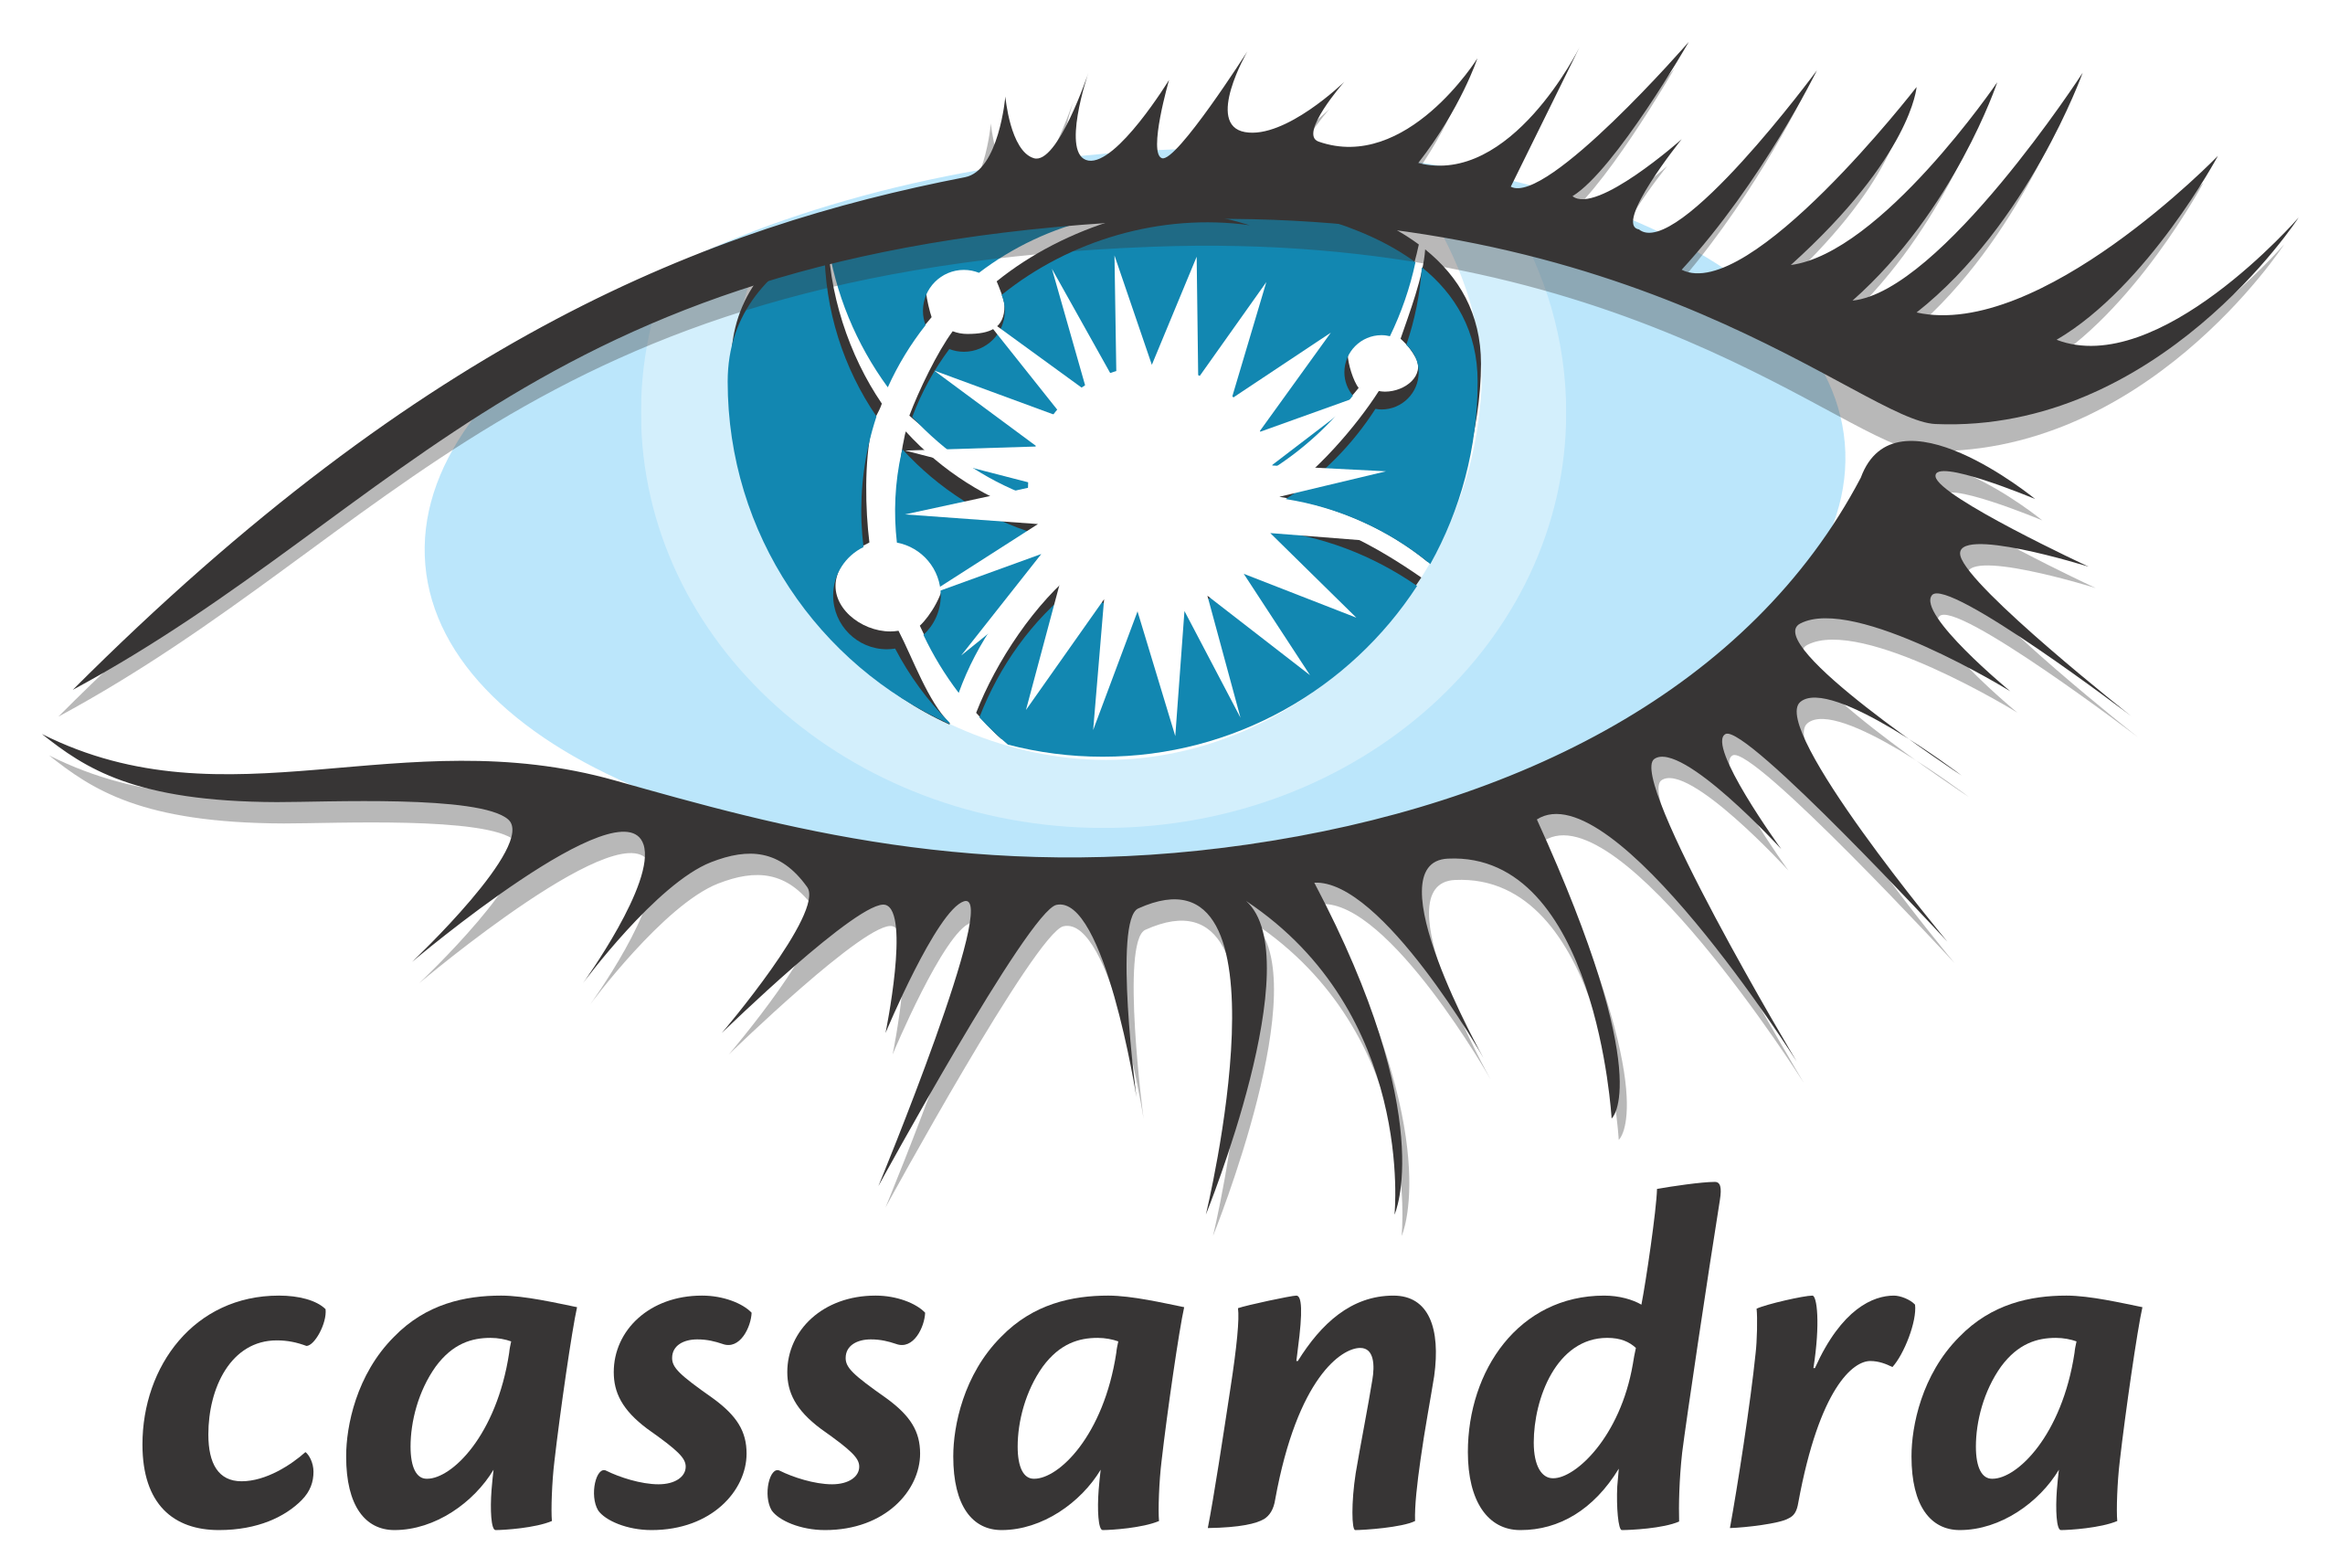 How to Install Cassandra on Ubuntu - Featured